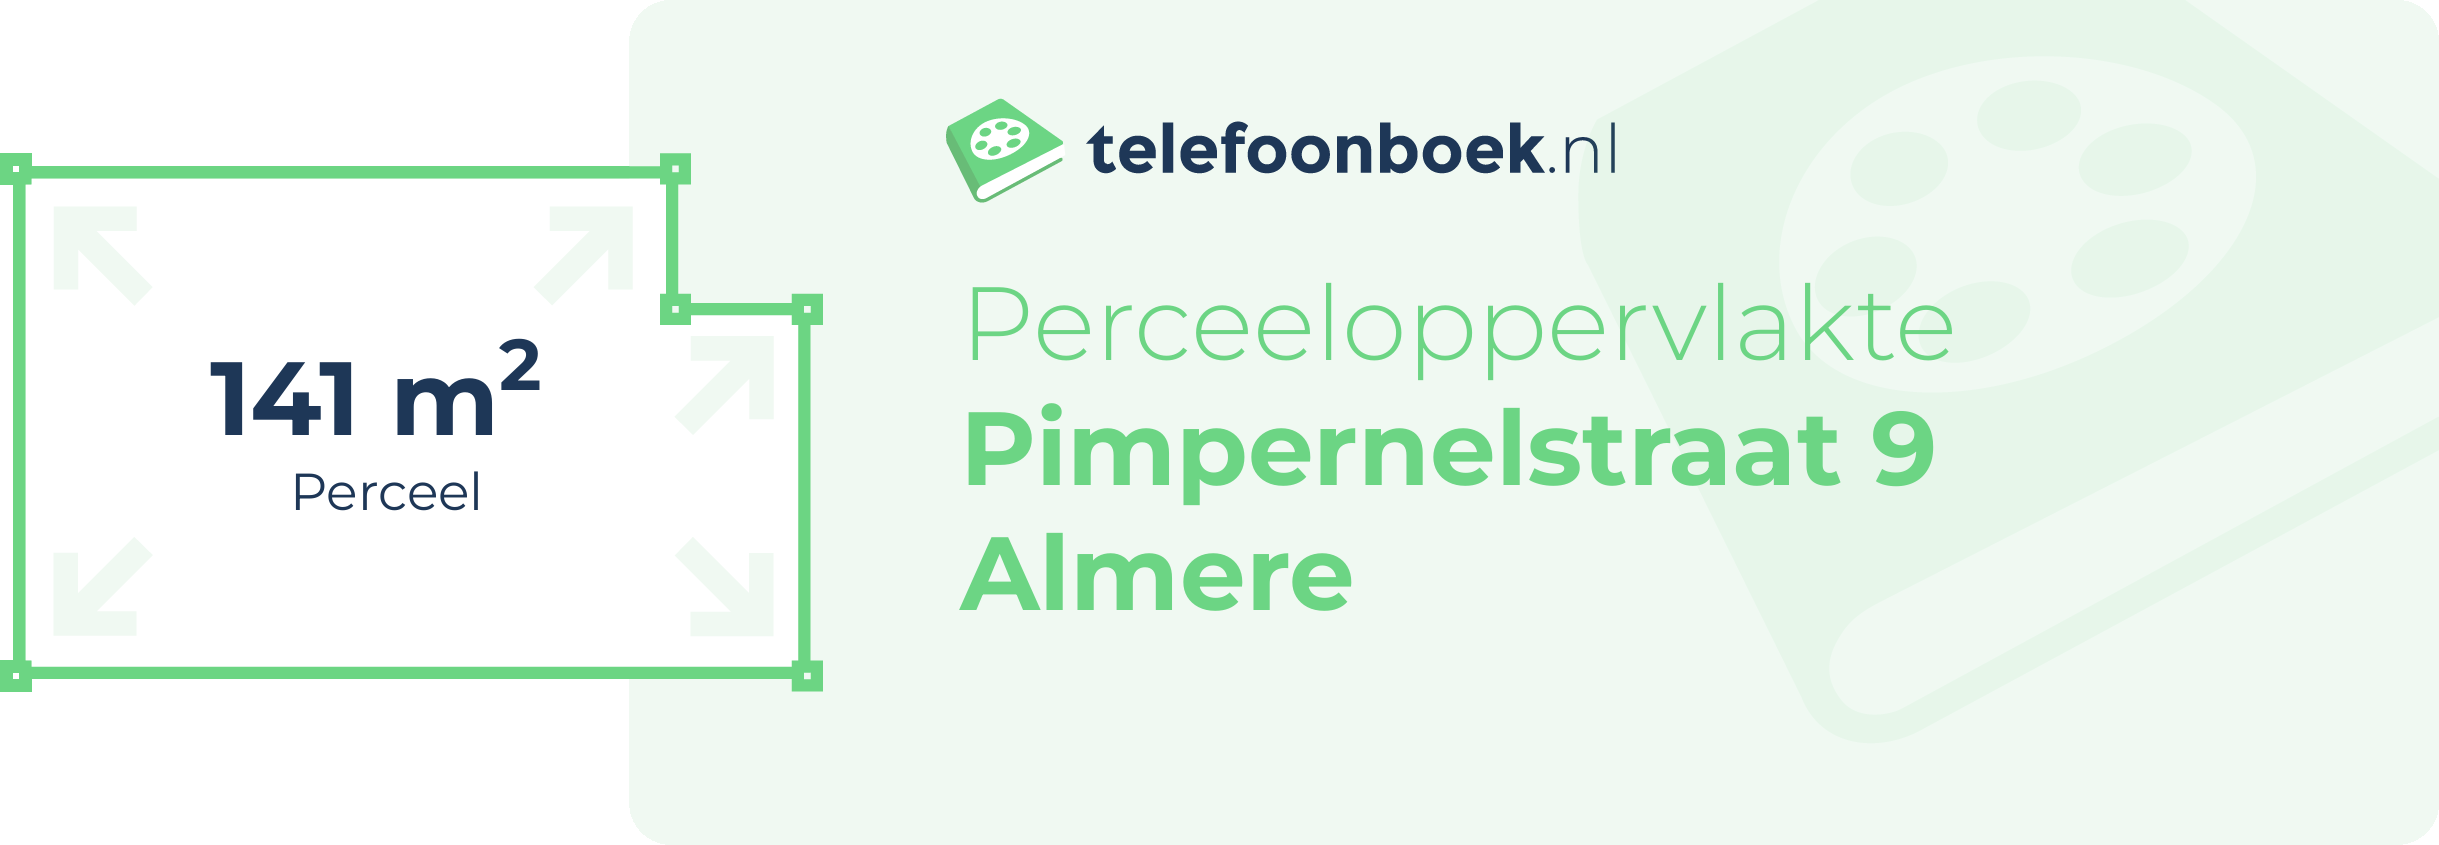 Perceeloppervlakte Pimpernelstraat 9 Almere